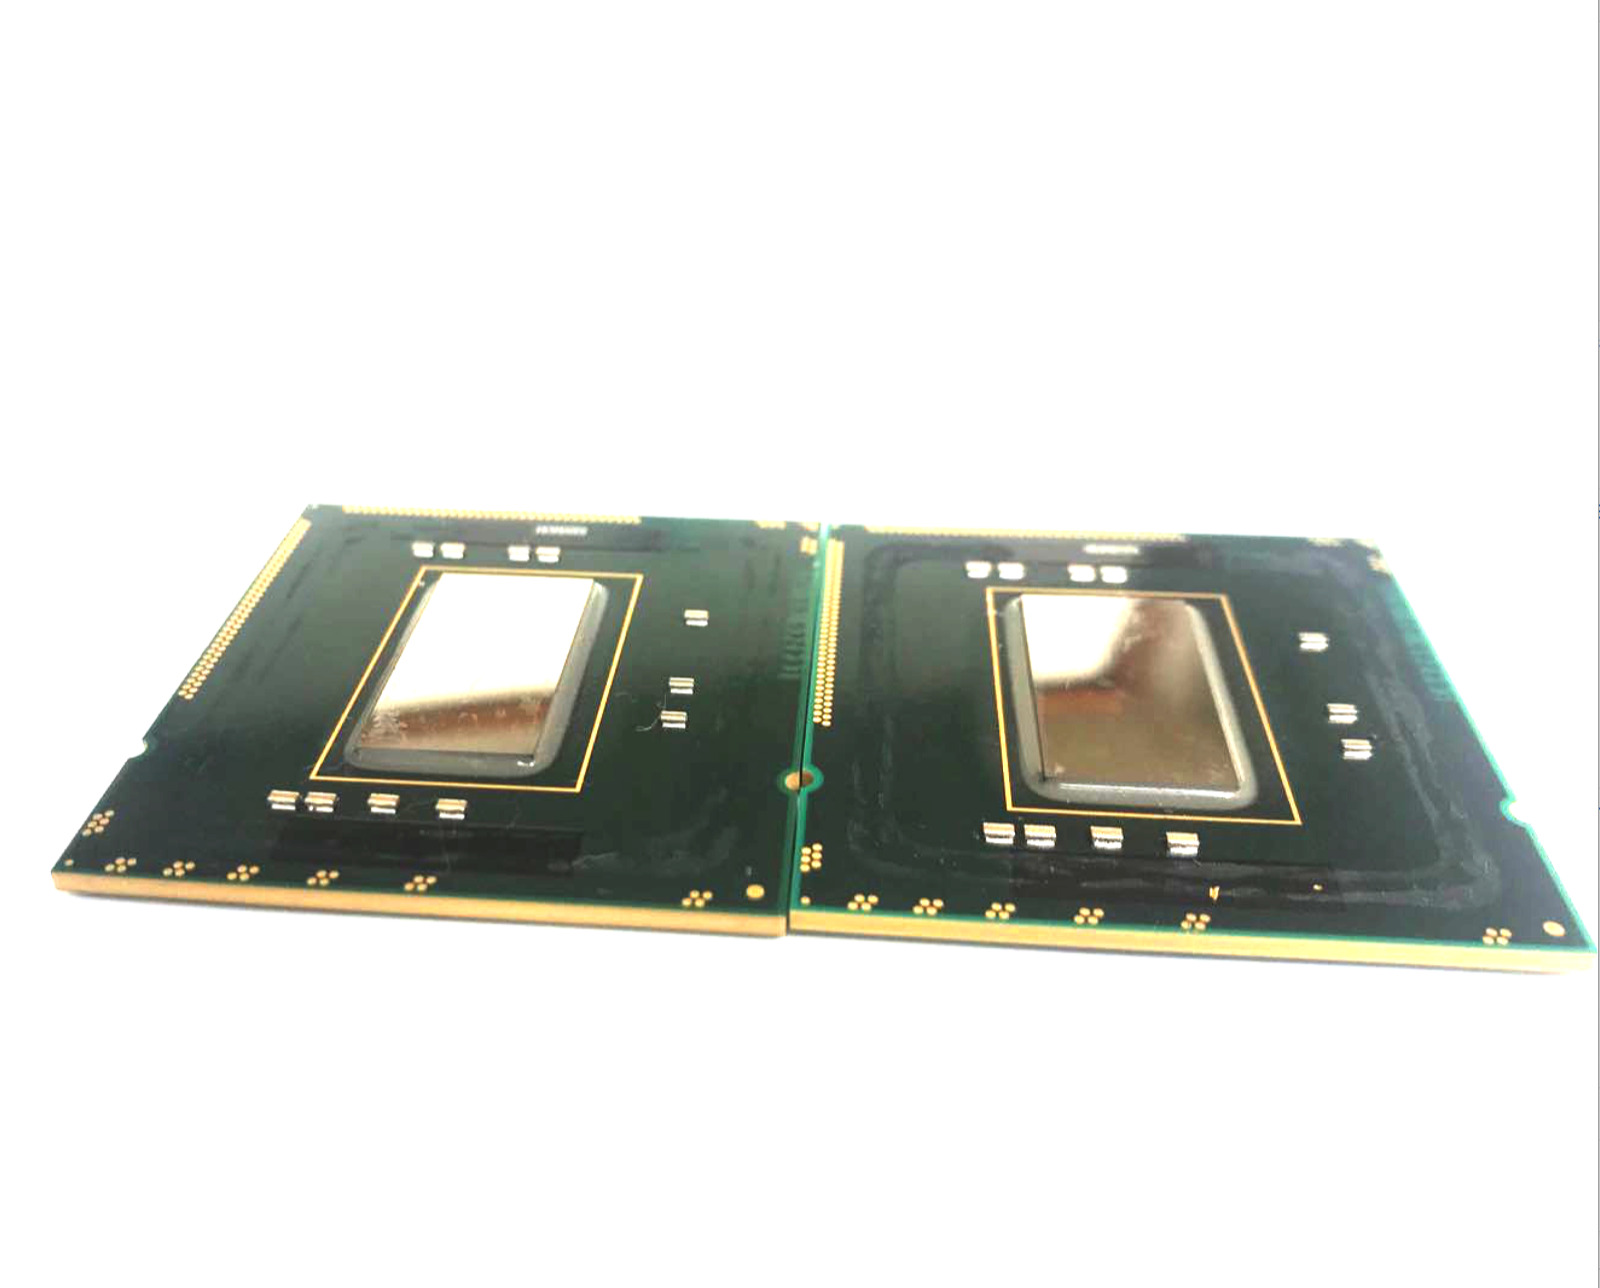 Delidded Pair - Intel Xeon X5690 SLBVX 3.46GHZ - LGA1366 Six-Core CPU Mac Pro